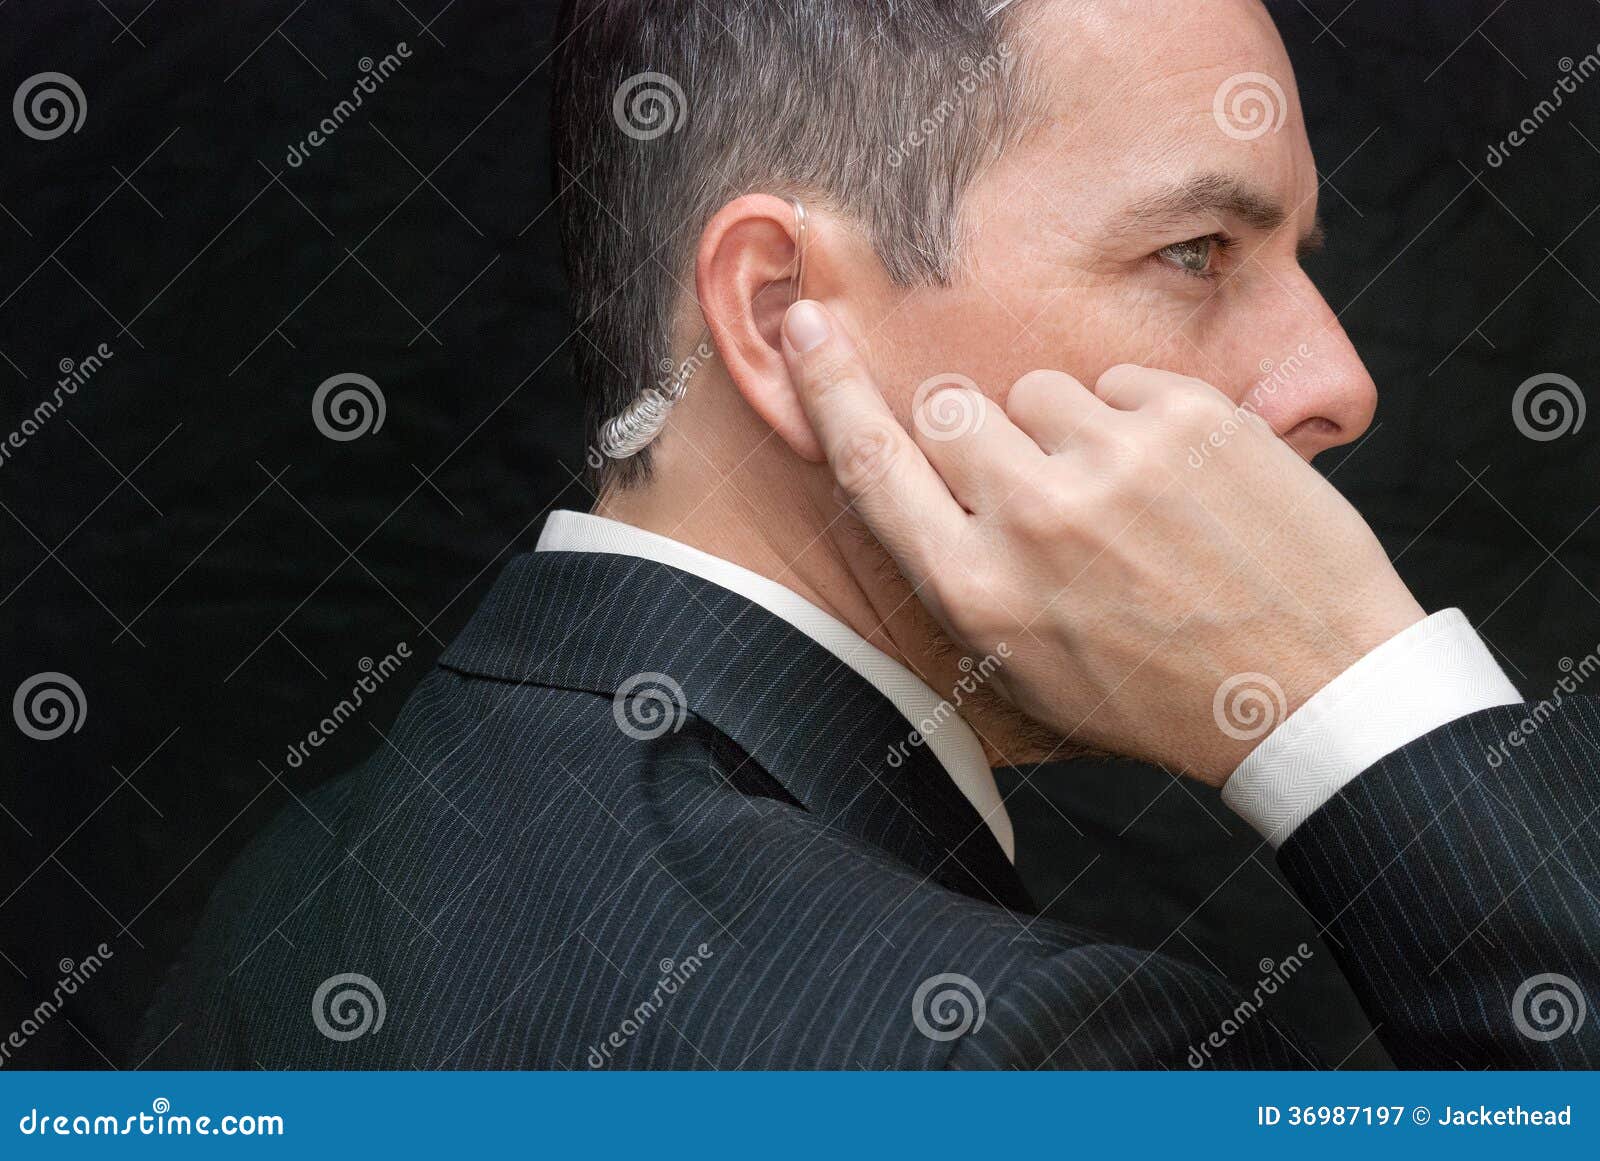 secret service agent listens to earpiece, side